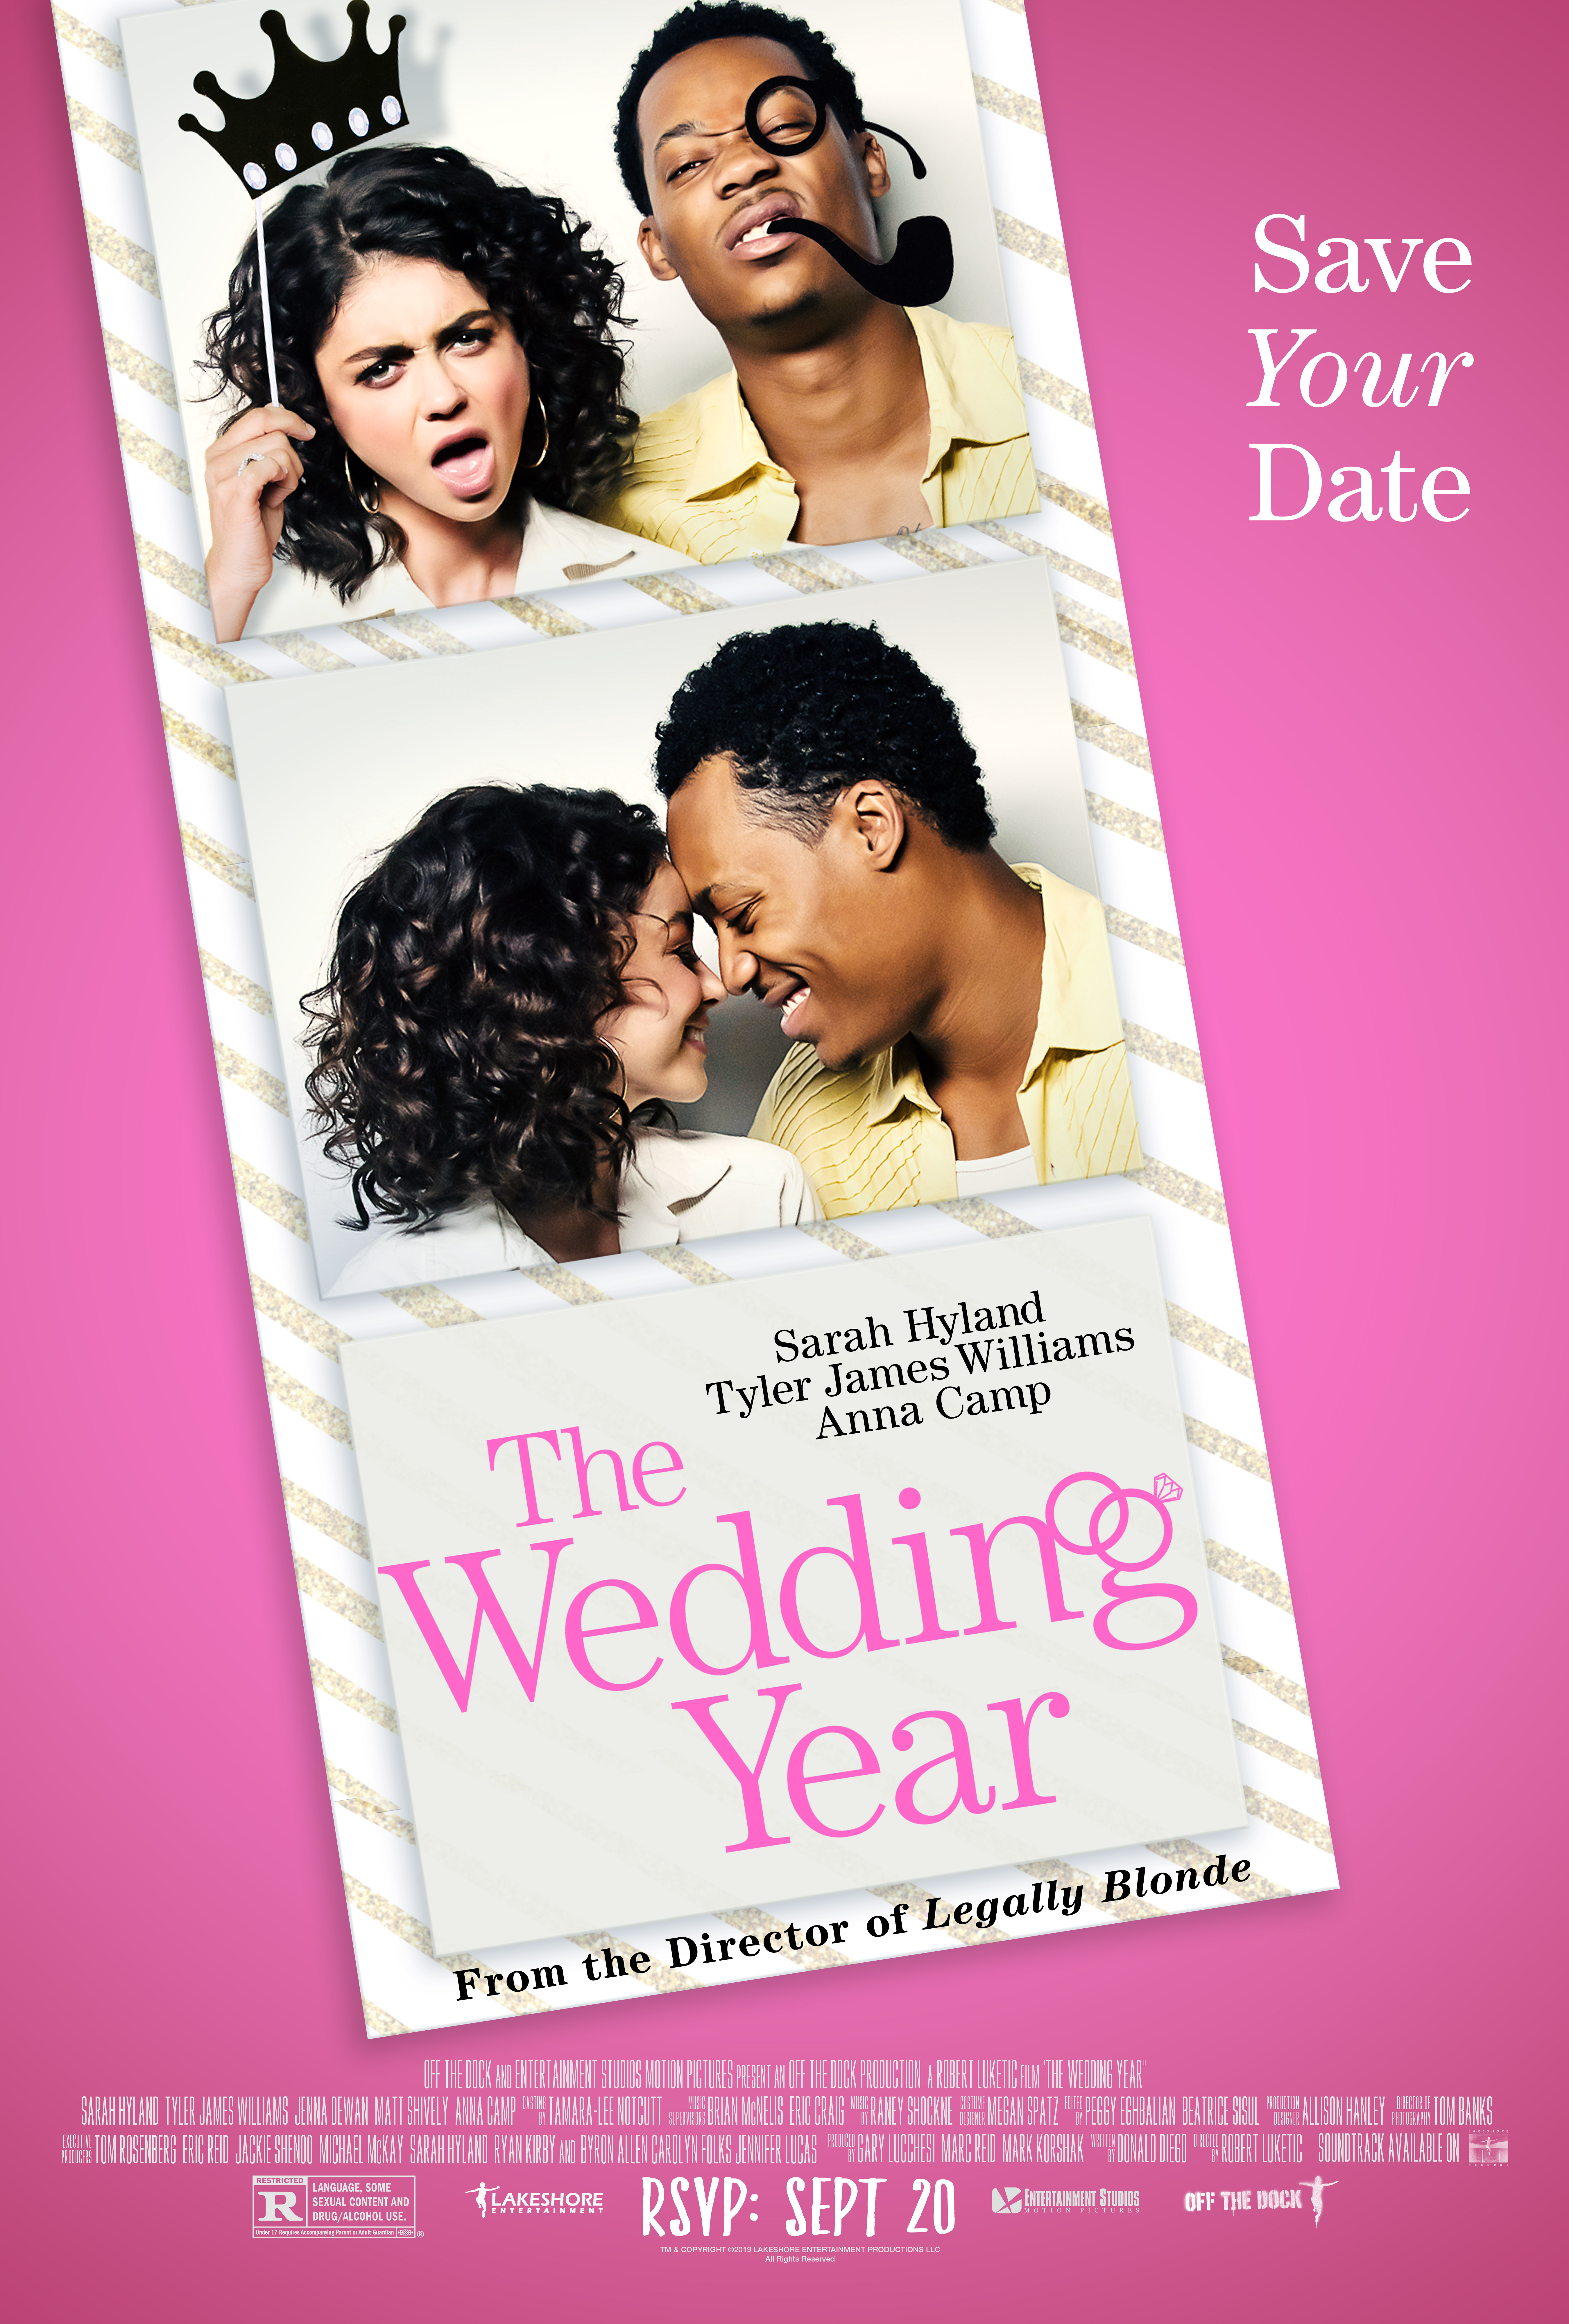 Nonton film The Wedding Year layarkaca21 indoxx1 ganool online streaming terbaru